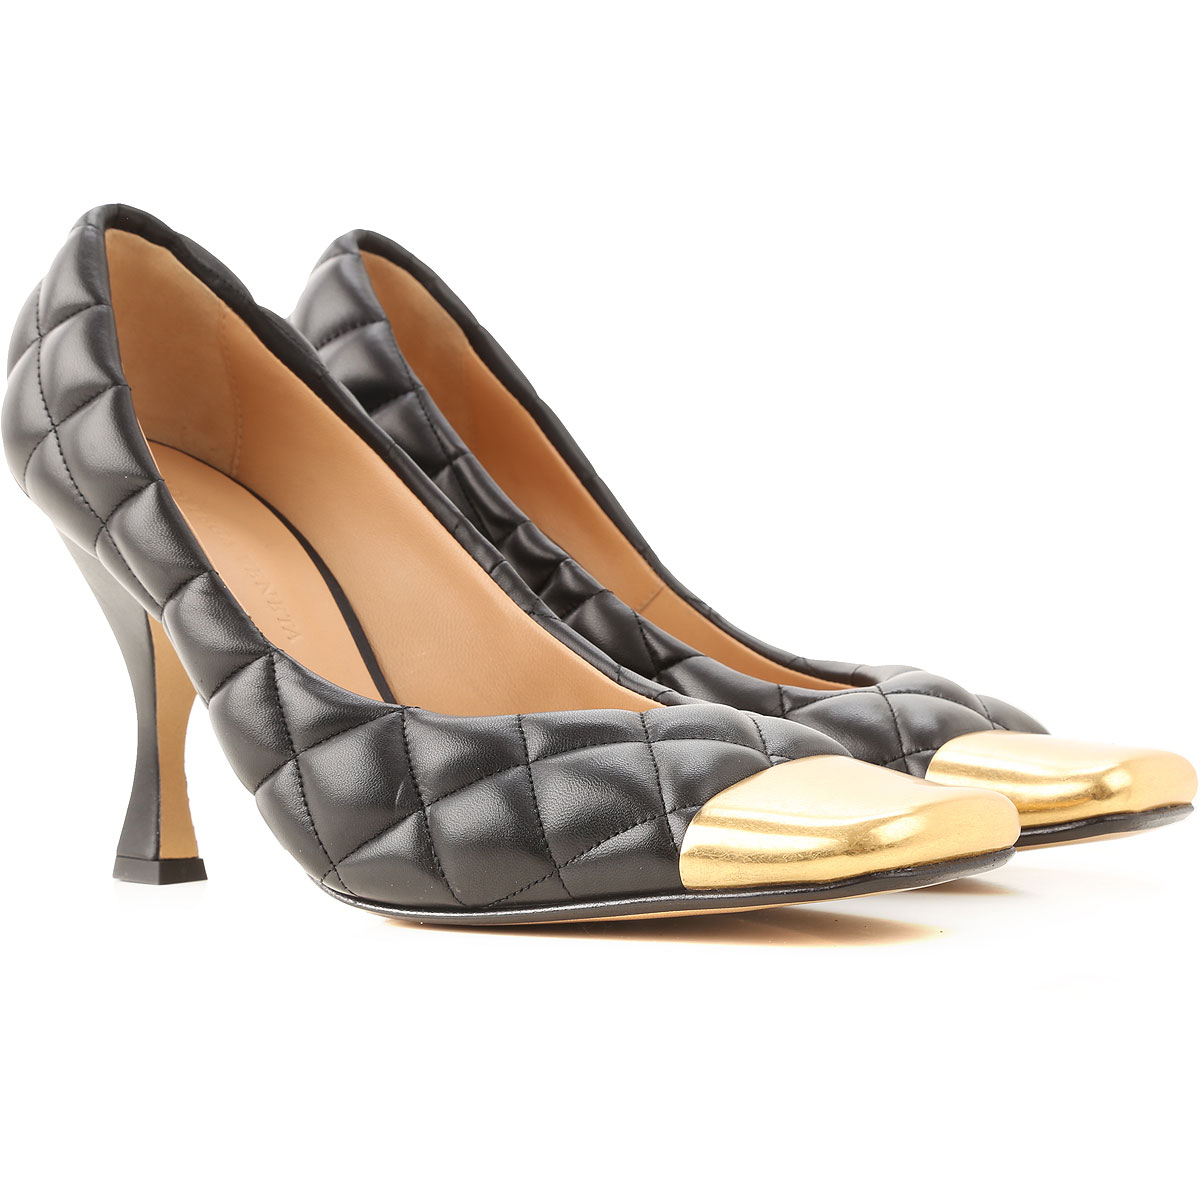 Sapatos Femininos Bottega Veneta, Detalhe do Modelo: 592040-vbrr0-1000